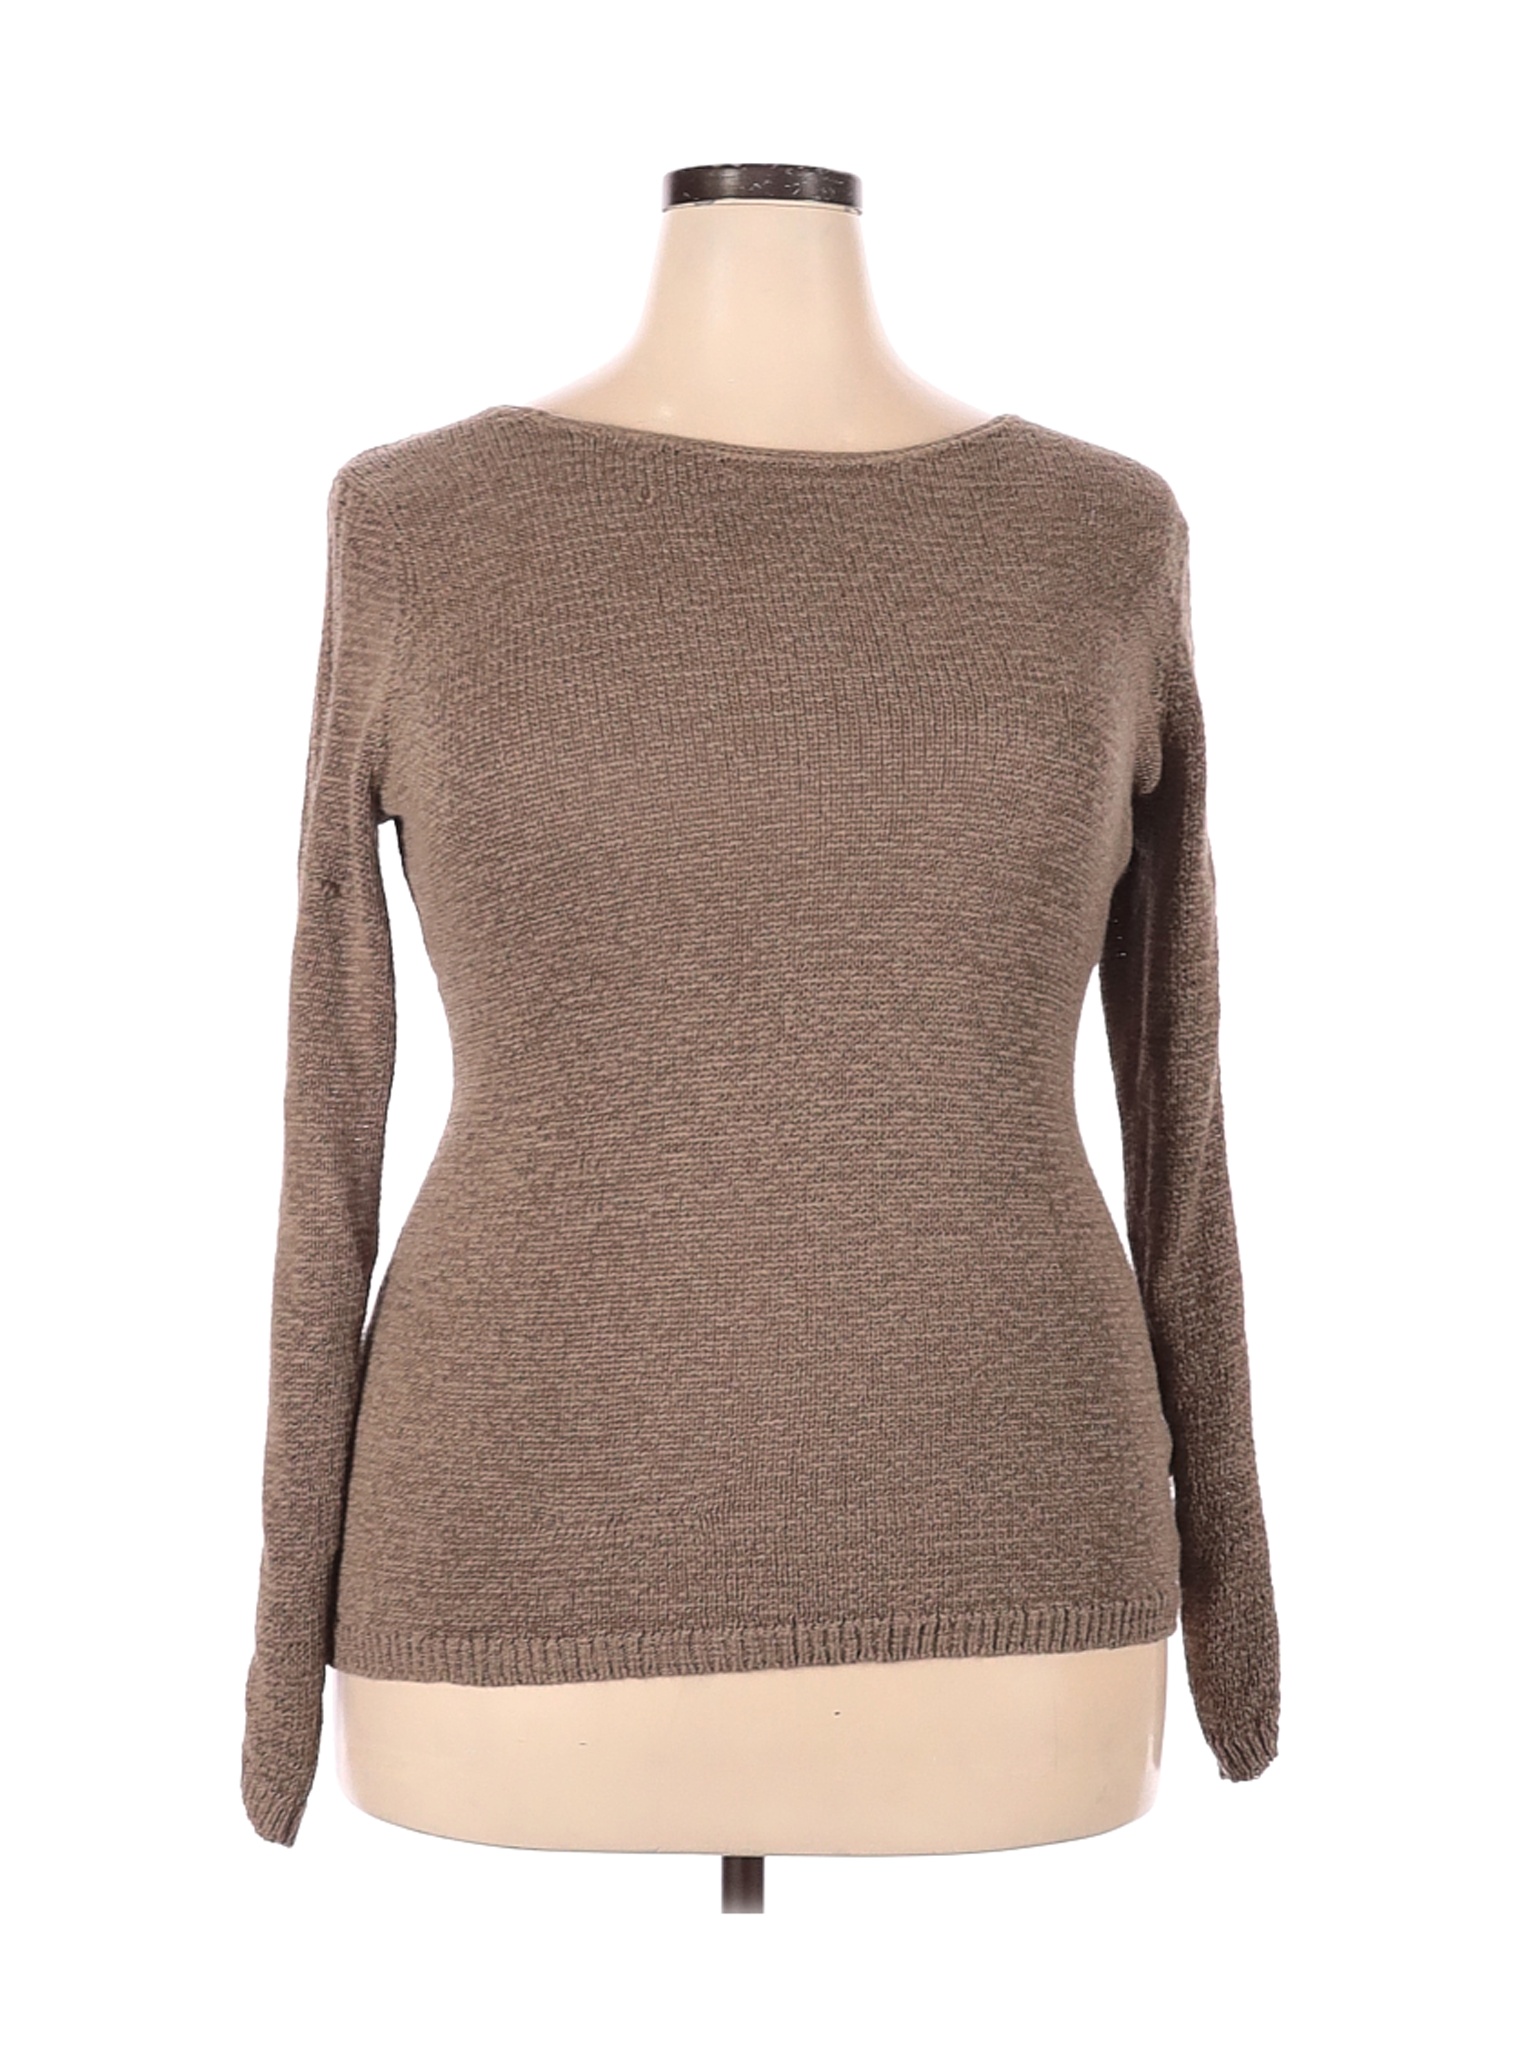 Rachel Zoe Women Brown Pullover Sweater XXL | eBay